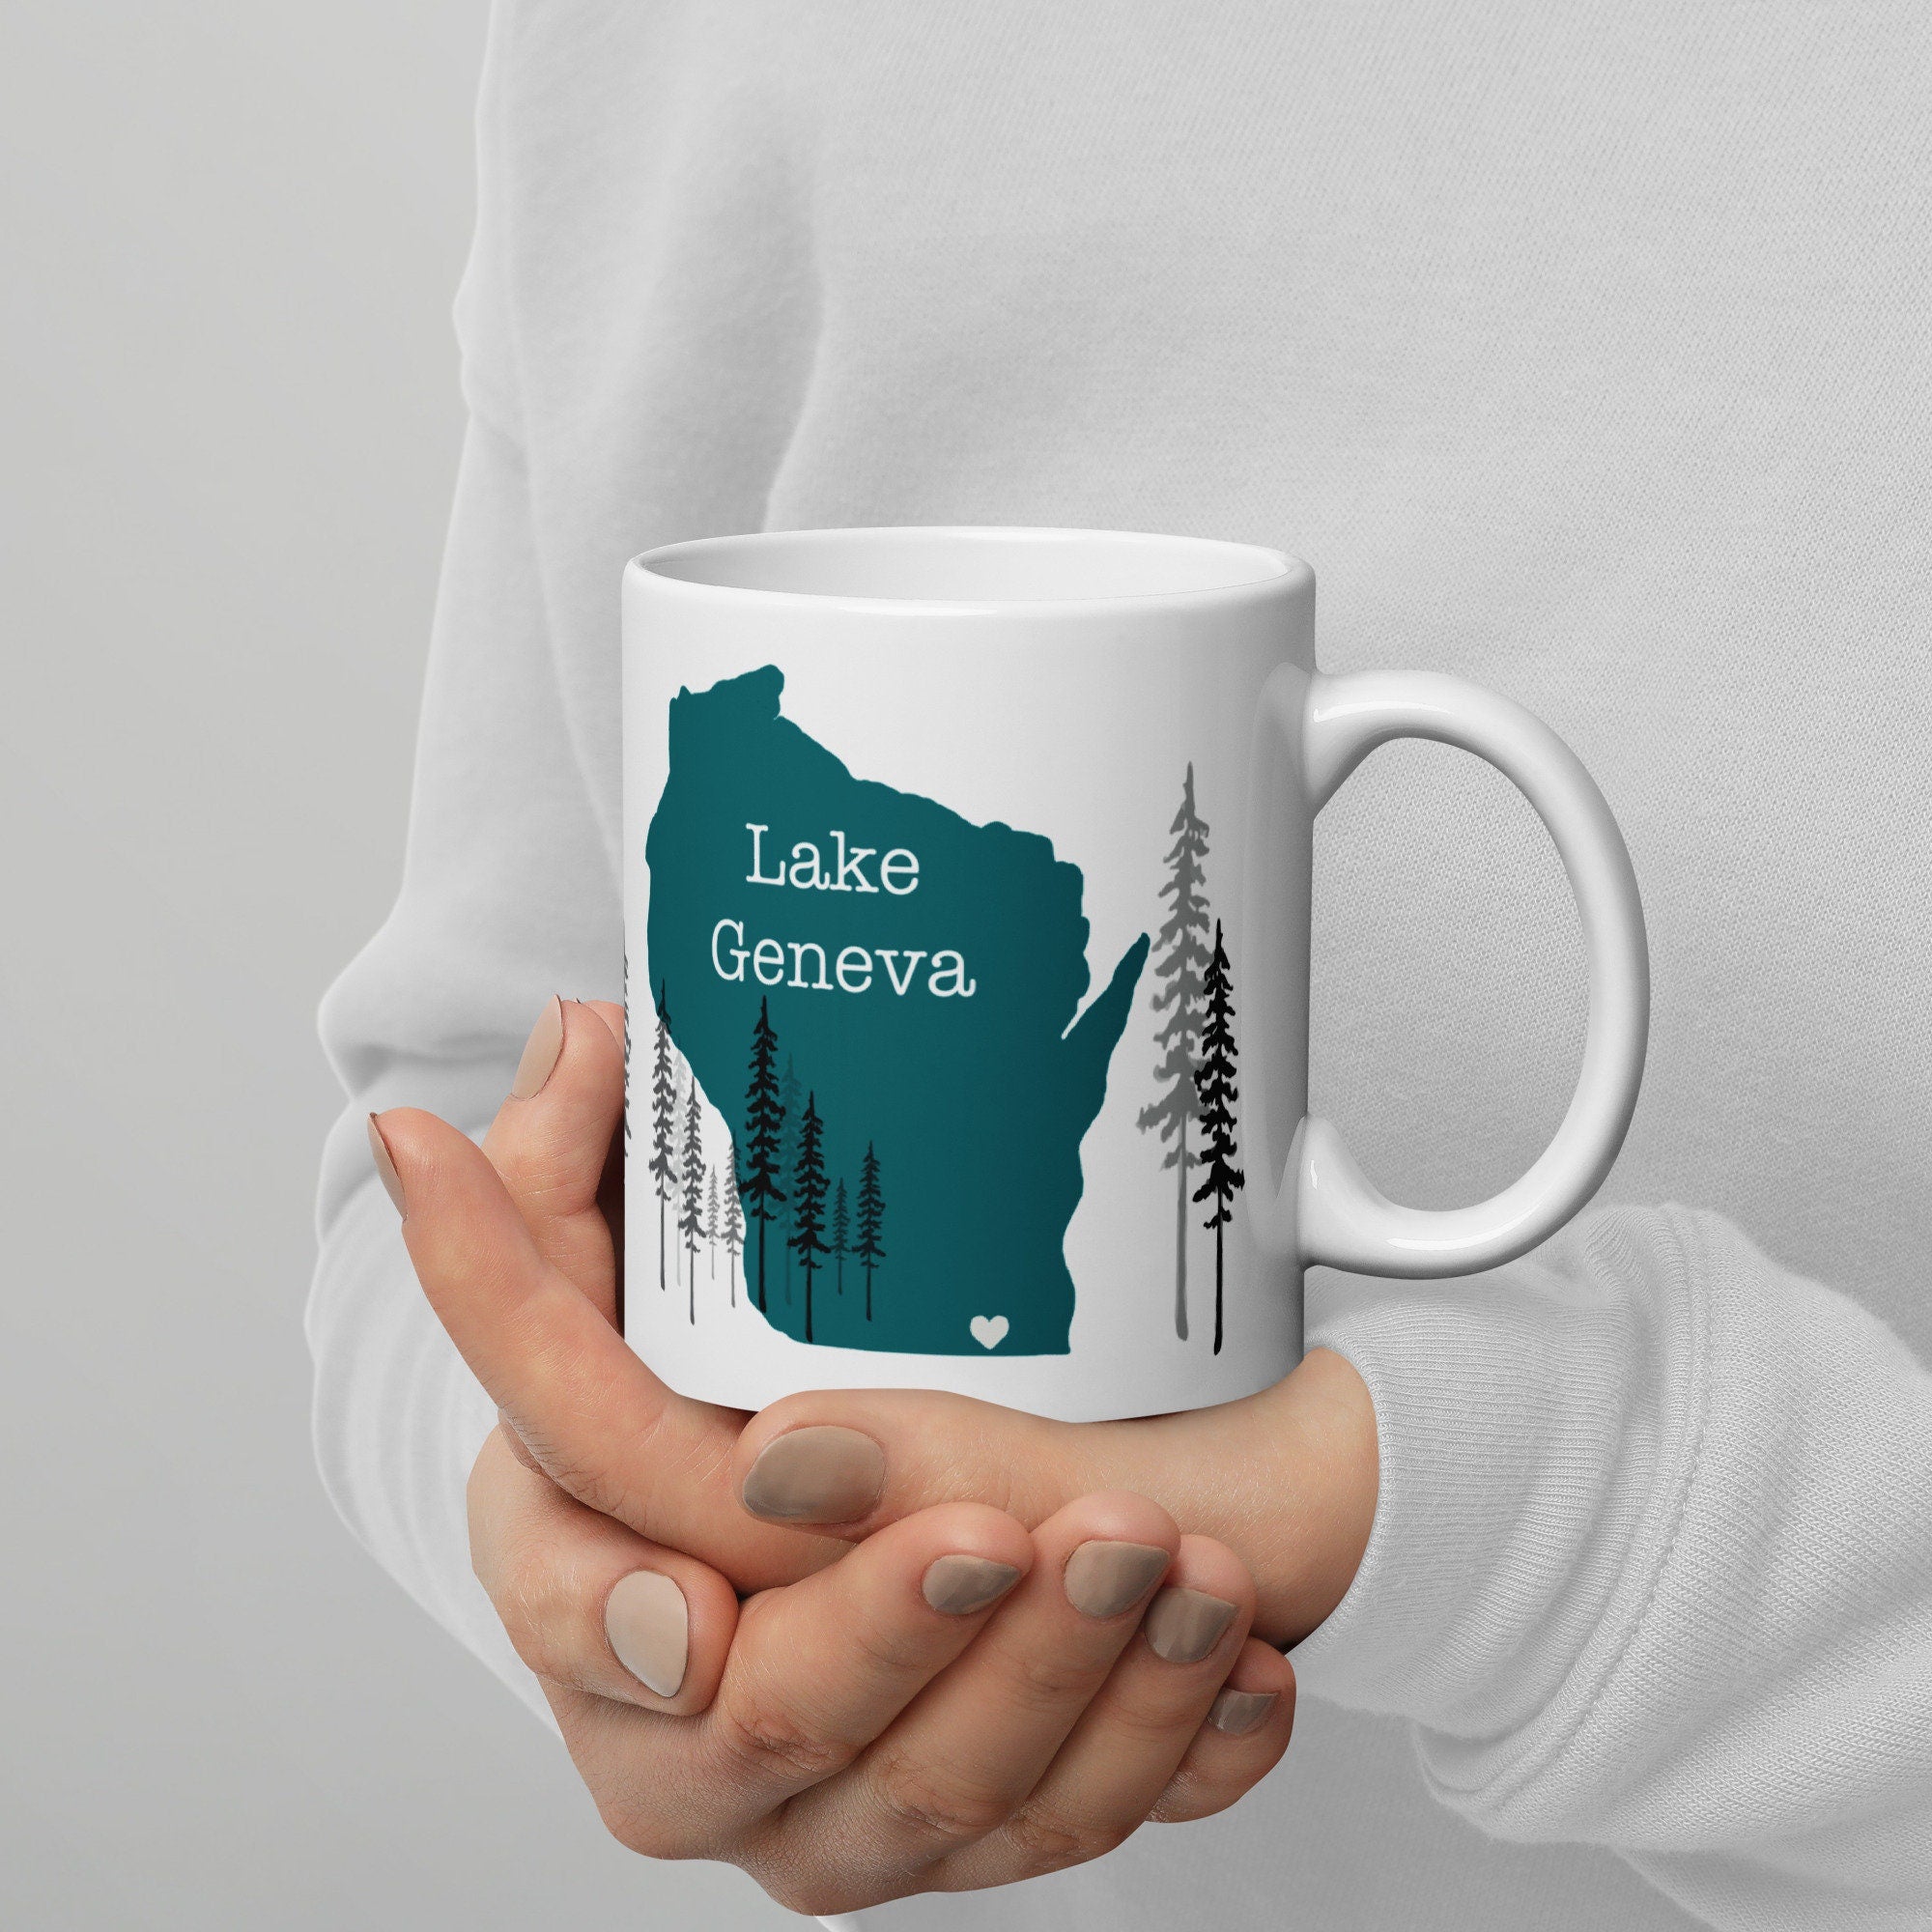 Lake Geneva Map Coffee Mug With Trees - Teal Wisconsin Cup Location You Are Here - Geneva Lake Area Housewarming gift Idea custom city